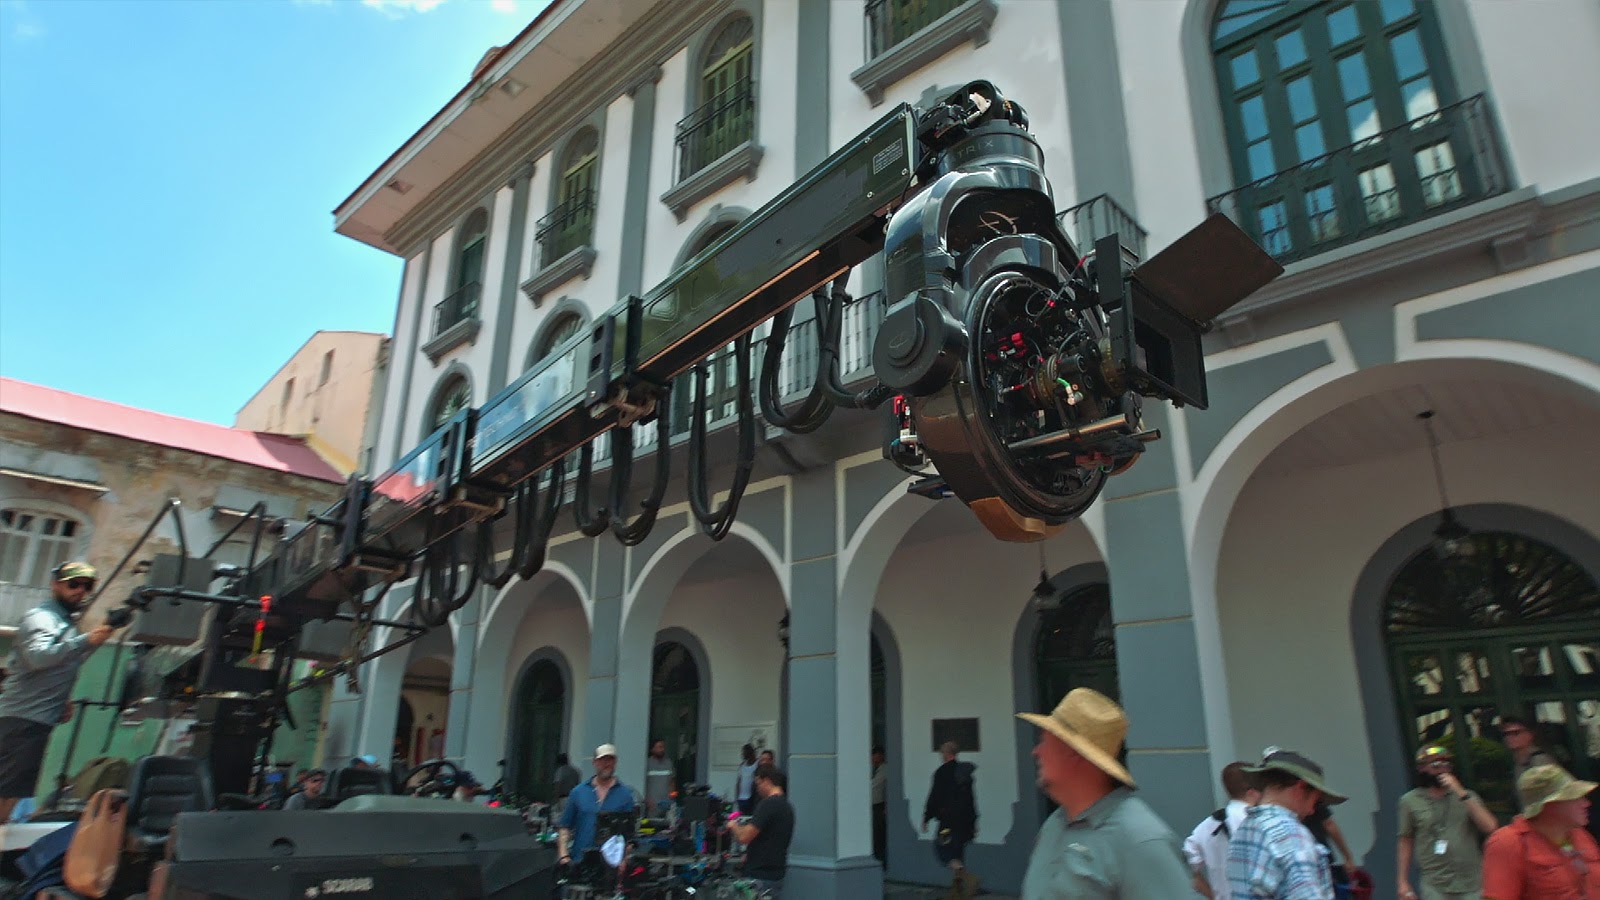 Camera crane filming The Suicide Squad on location.